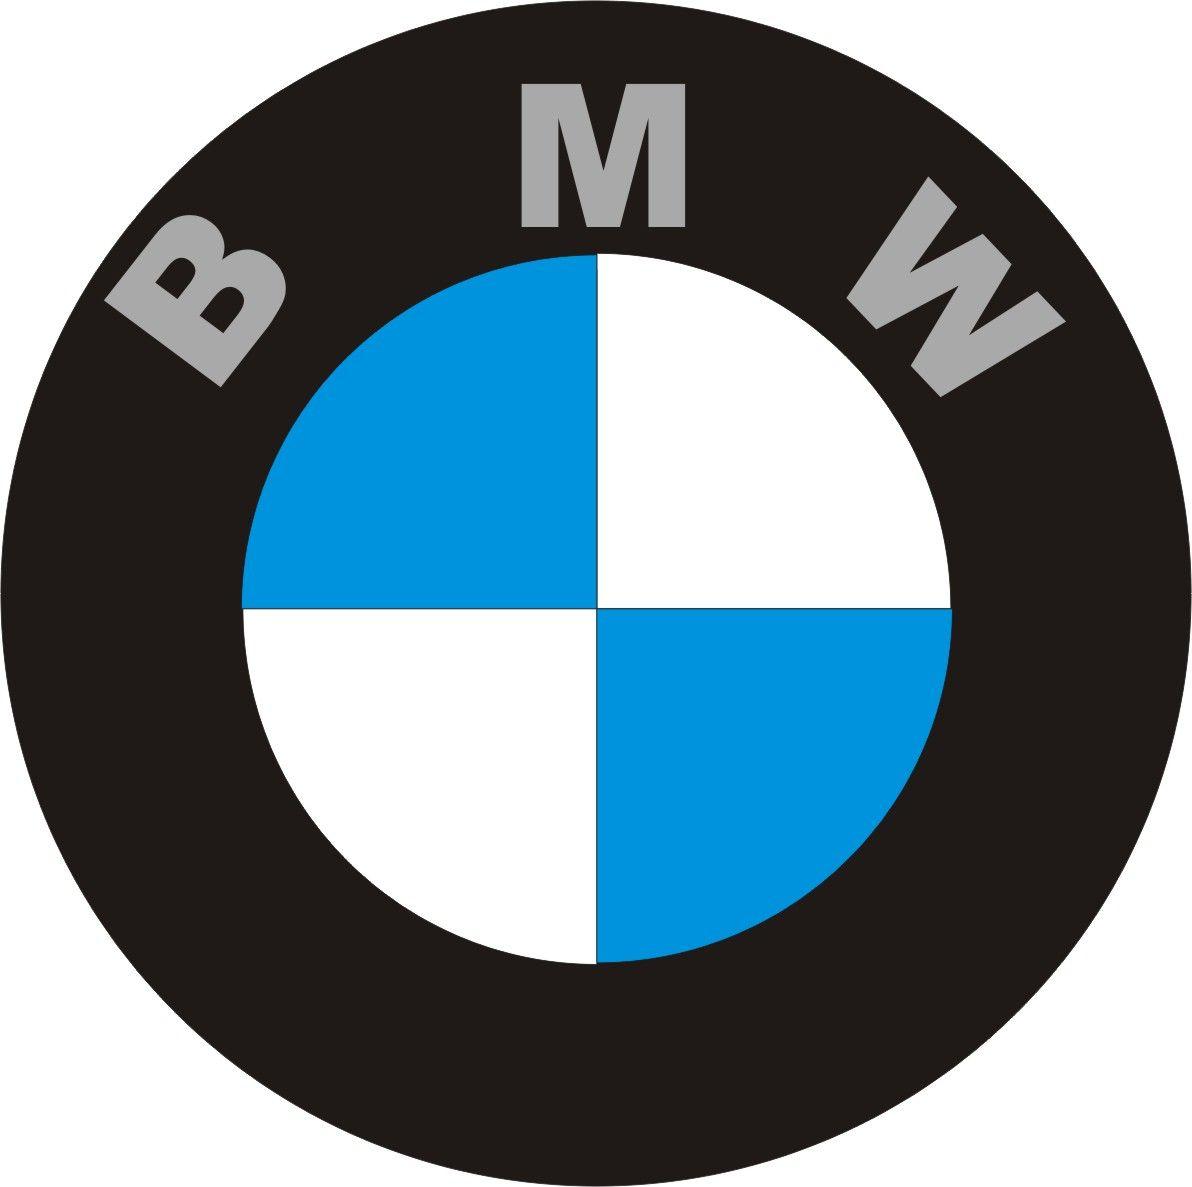 No Circle Logo - BMW Logo, BMW Car Symbol Meaning, Emblem of Car Brand | Car Brand ...